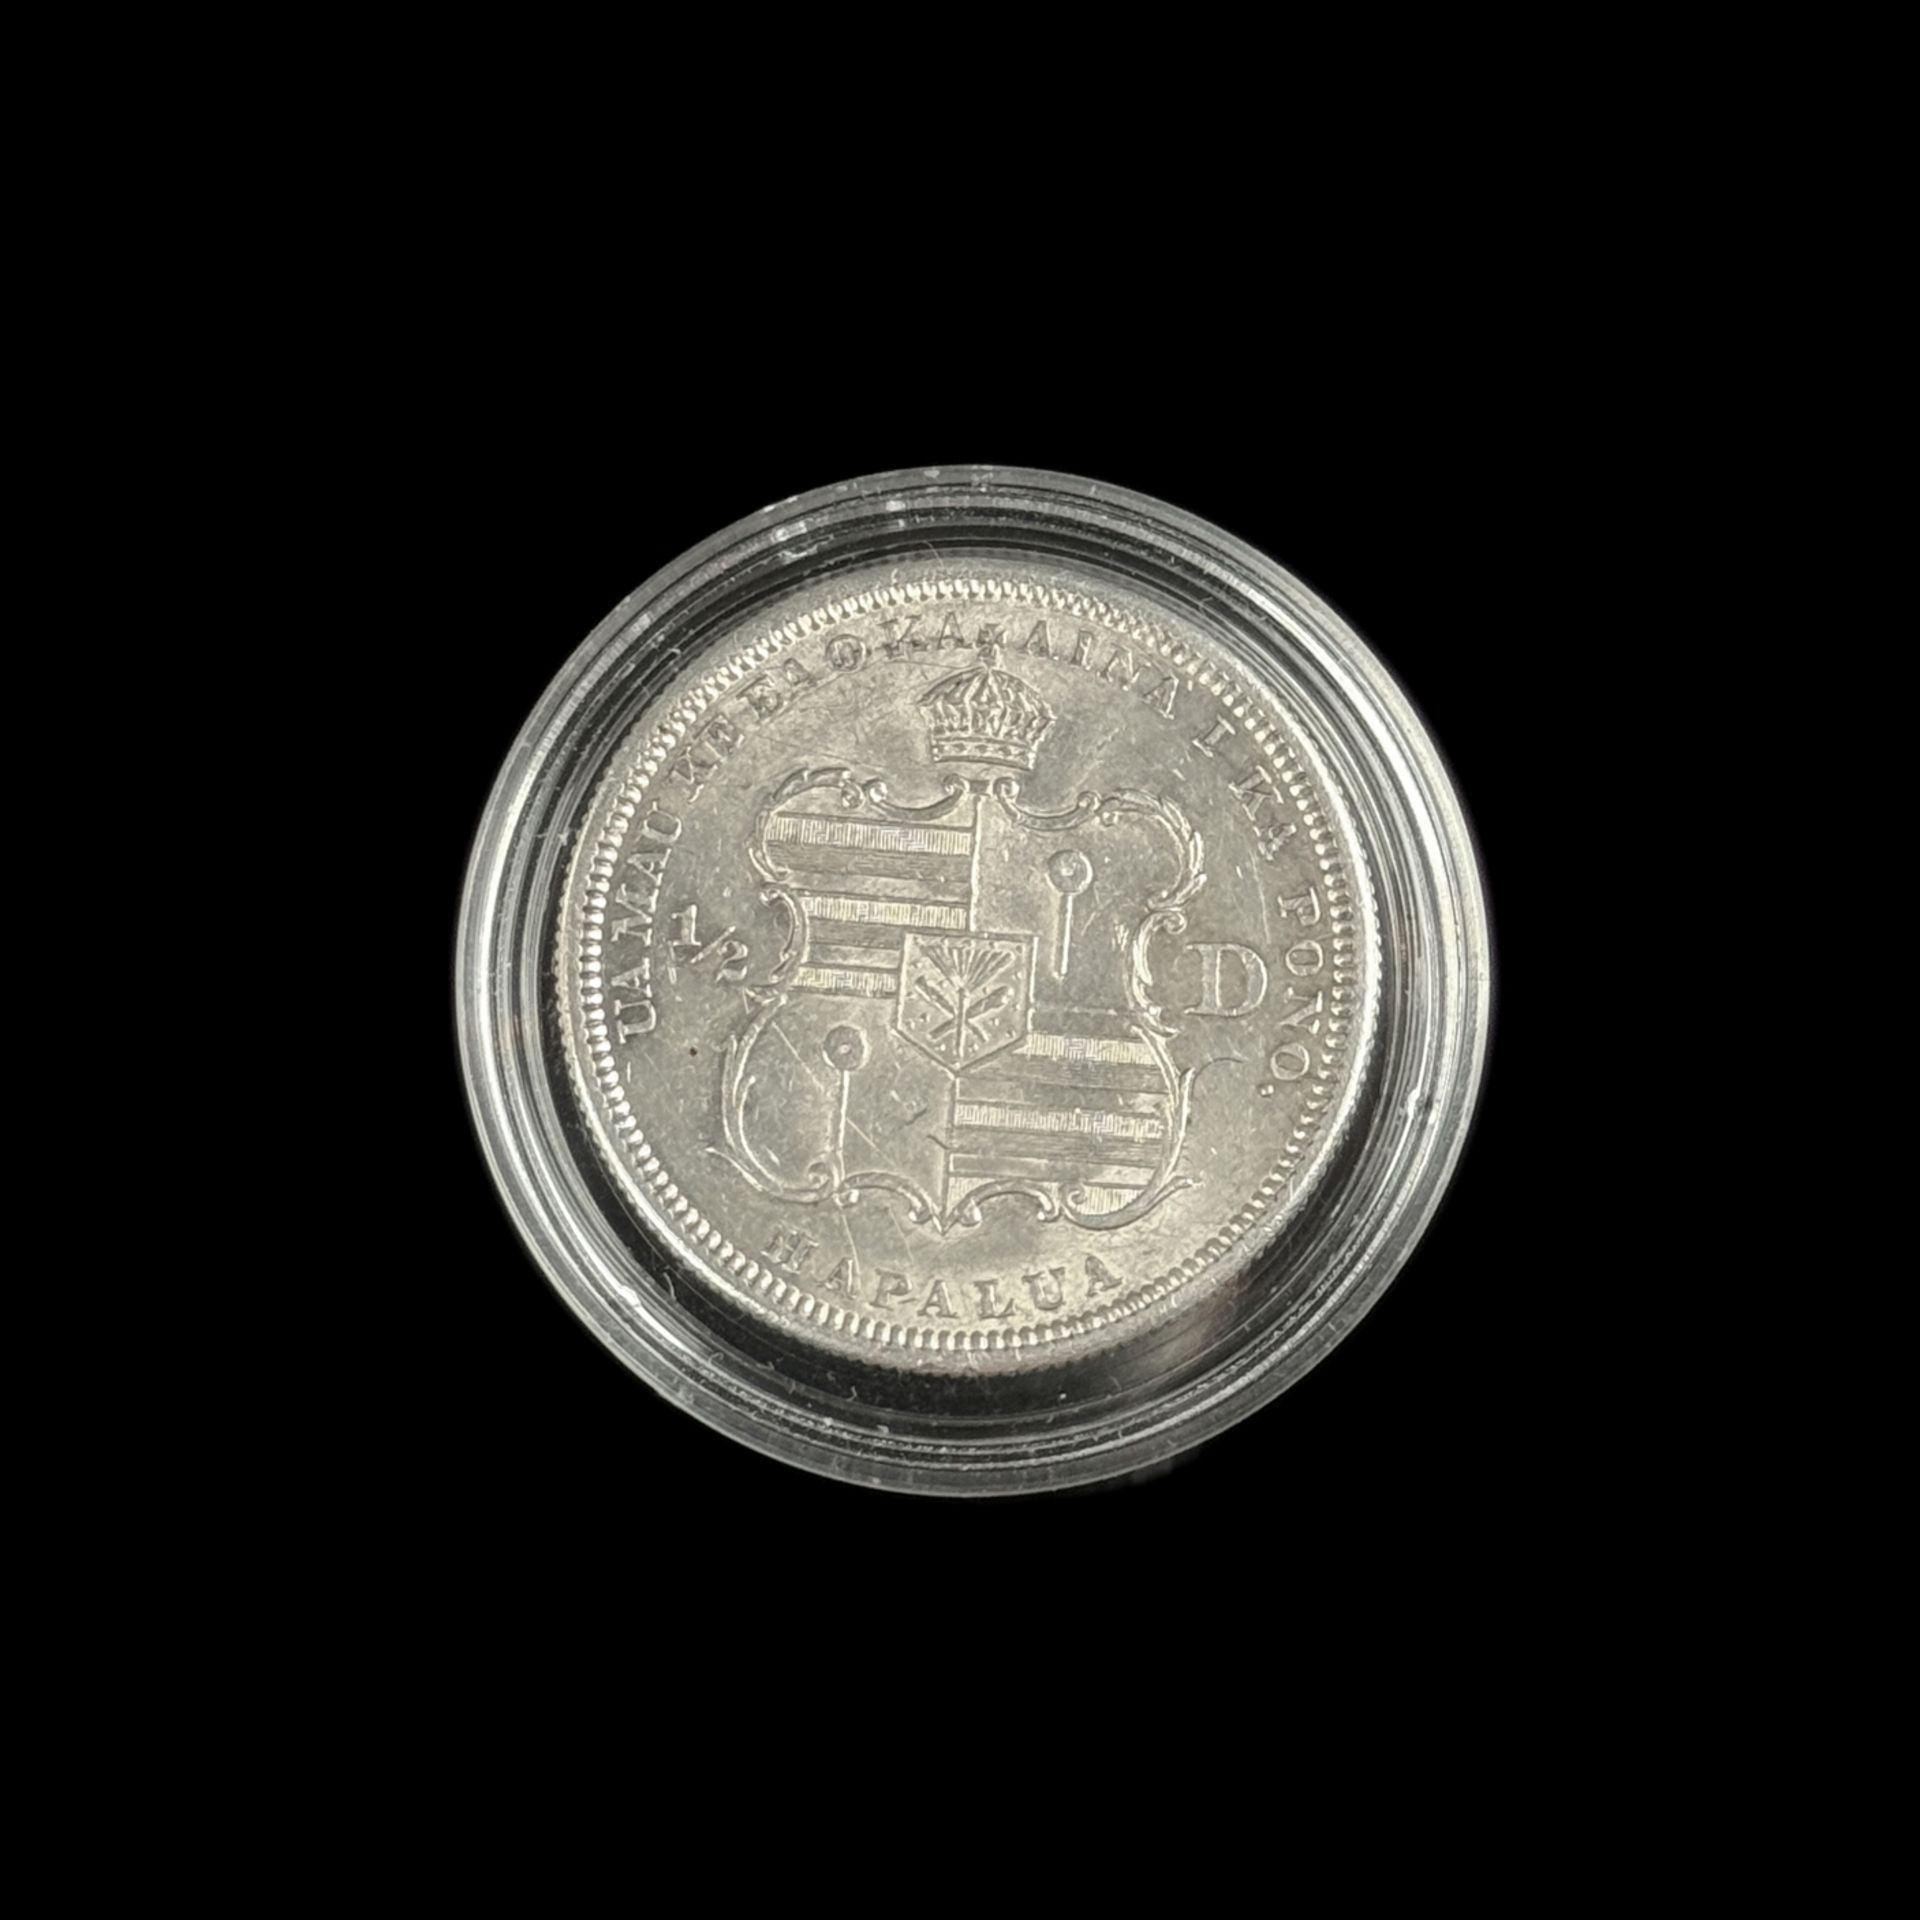 Silver coin, USA, Hawaii, silver 925, Kalakaua I, half dollar, 1883, diameter approx. 30.5mm - Image 2 of 2